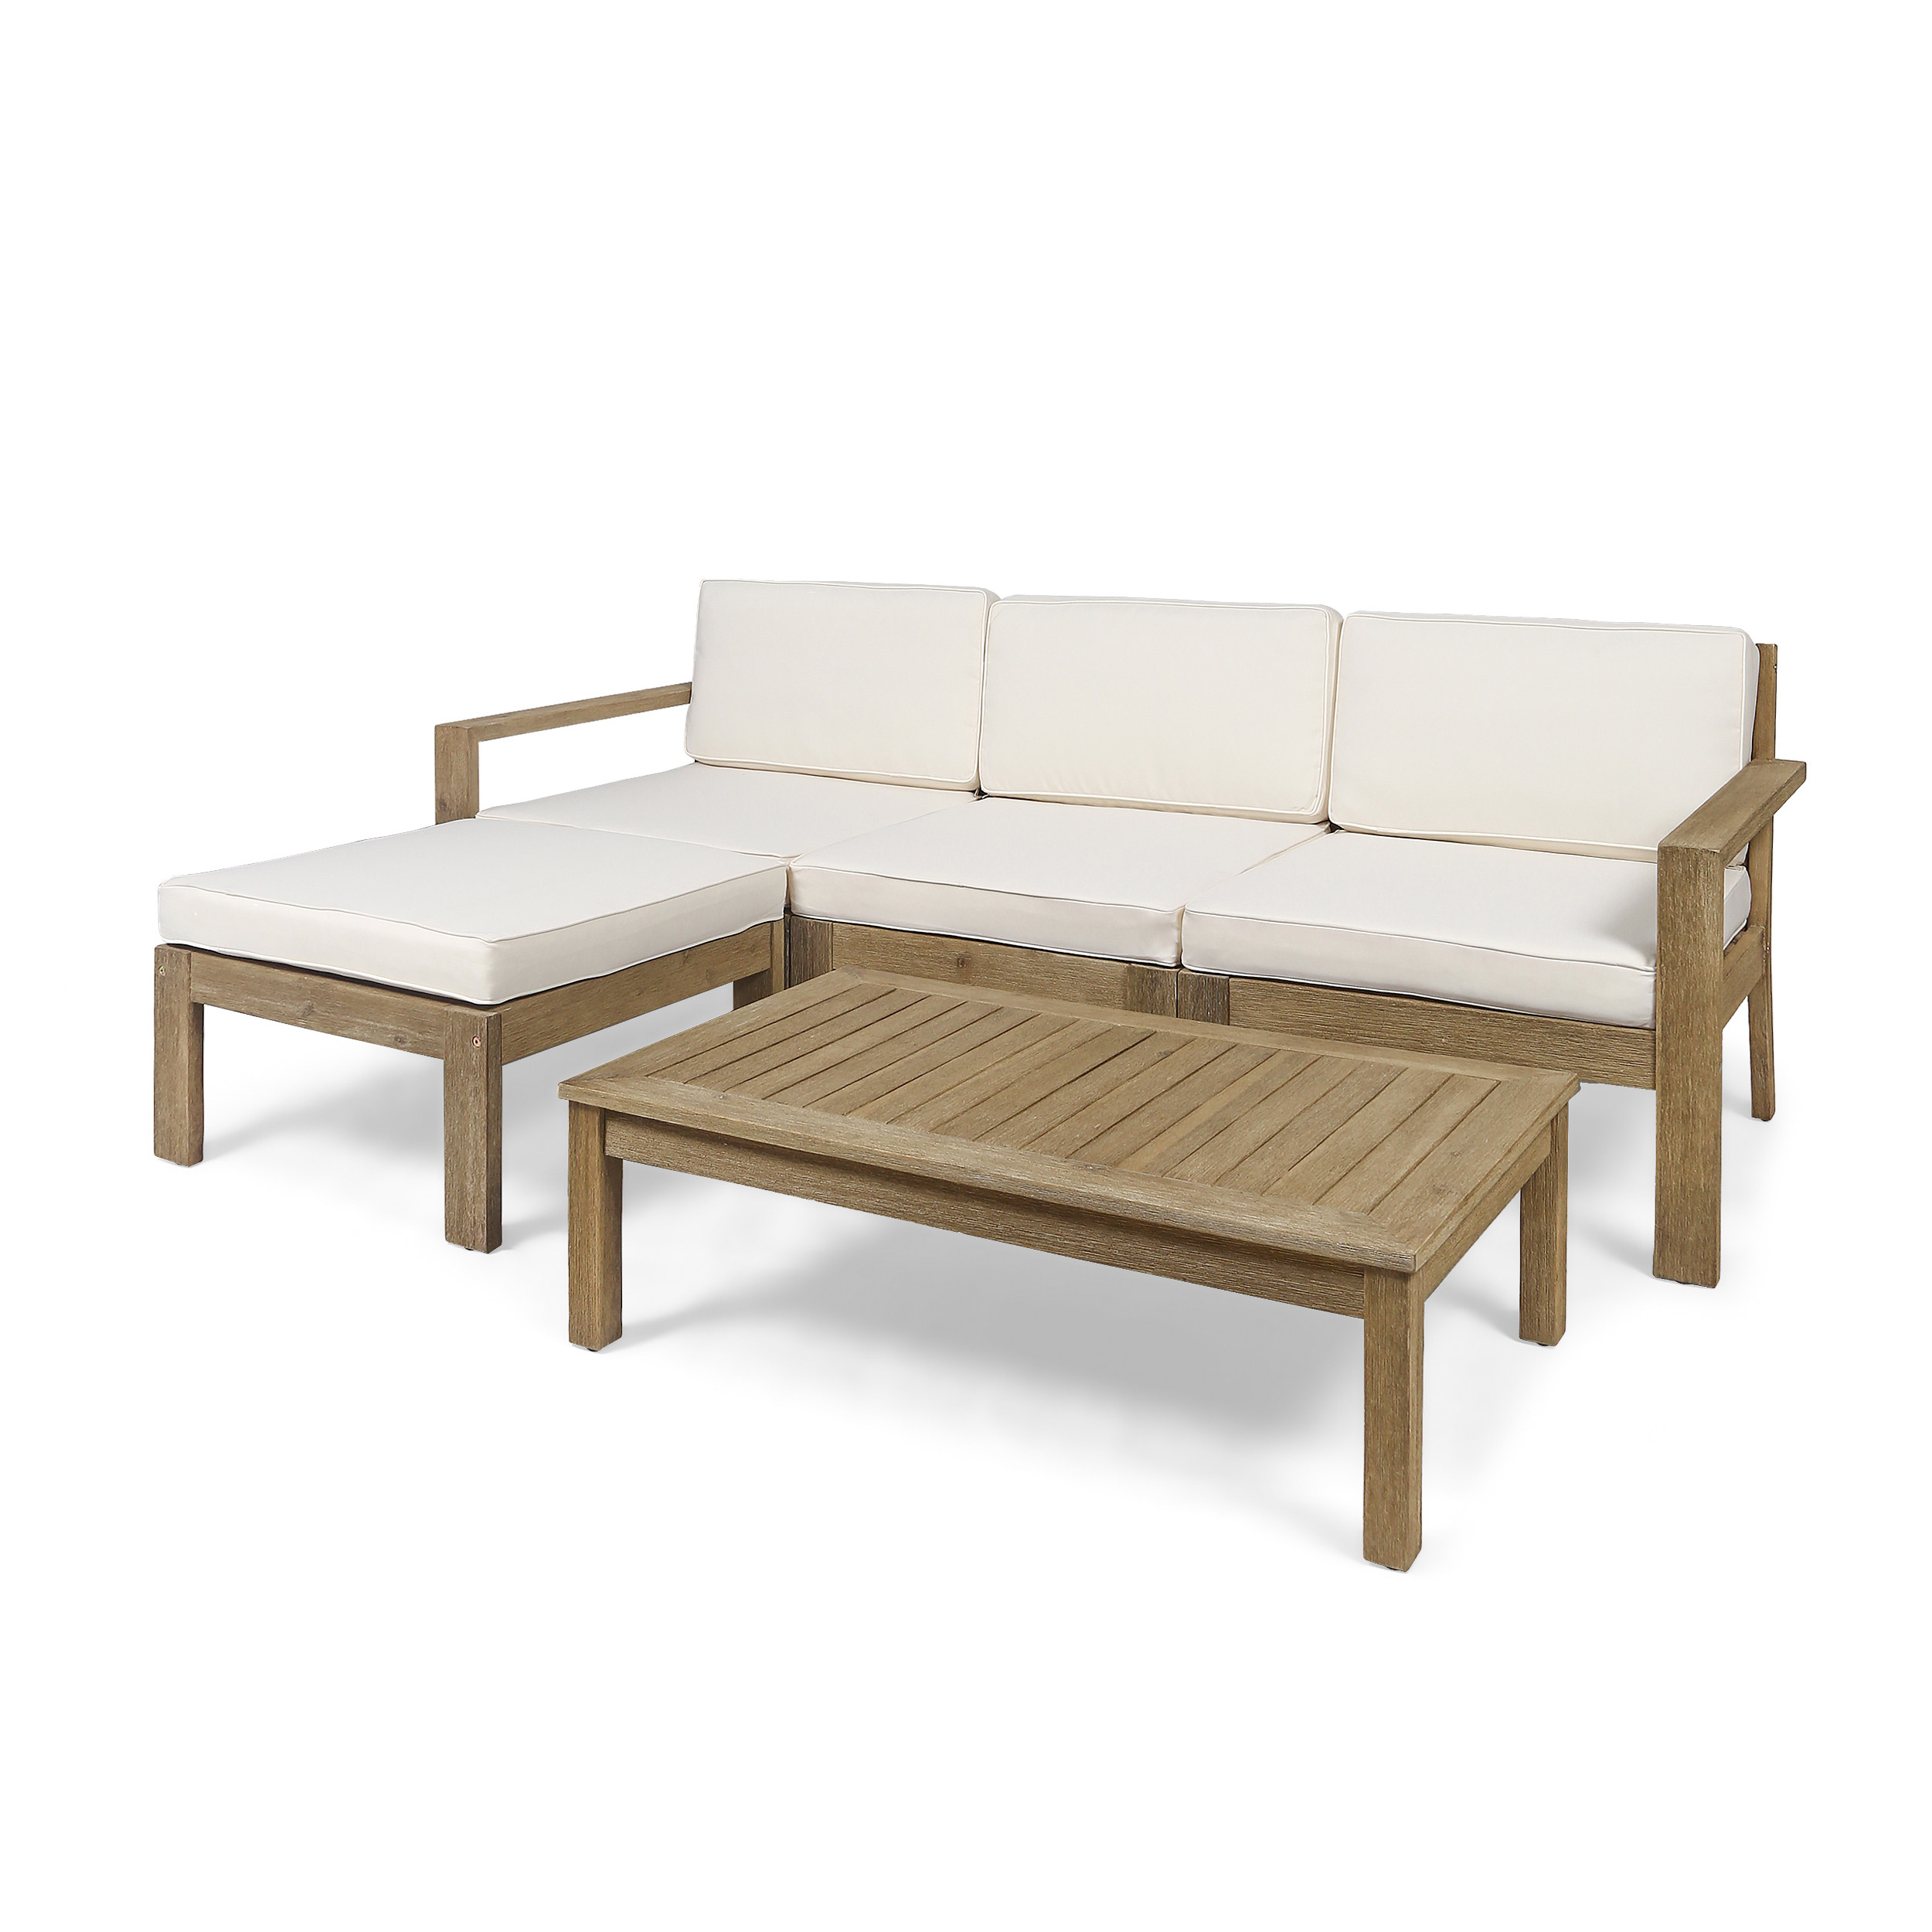 GDF Studio Makayla Outdoor 3 Seater Acacia Wood Sofa Sectional, Light Brown and Cream - image 1 of 10